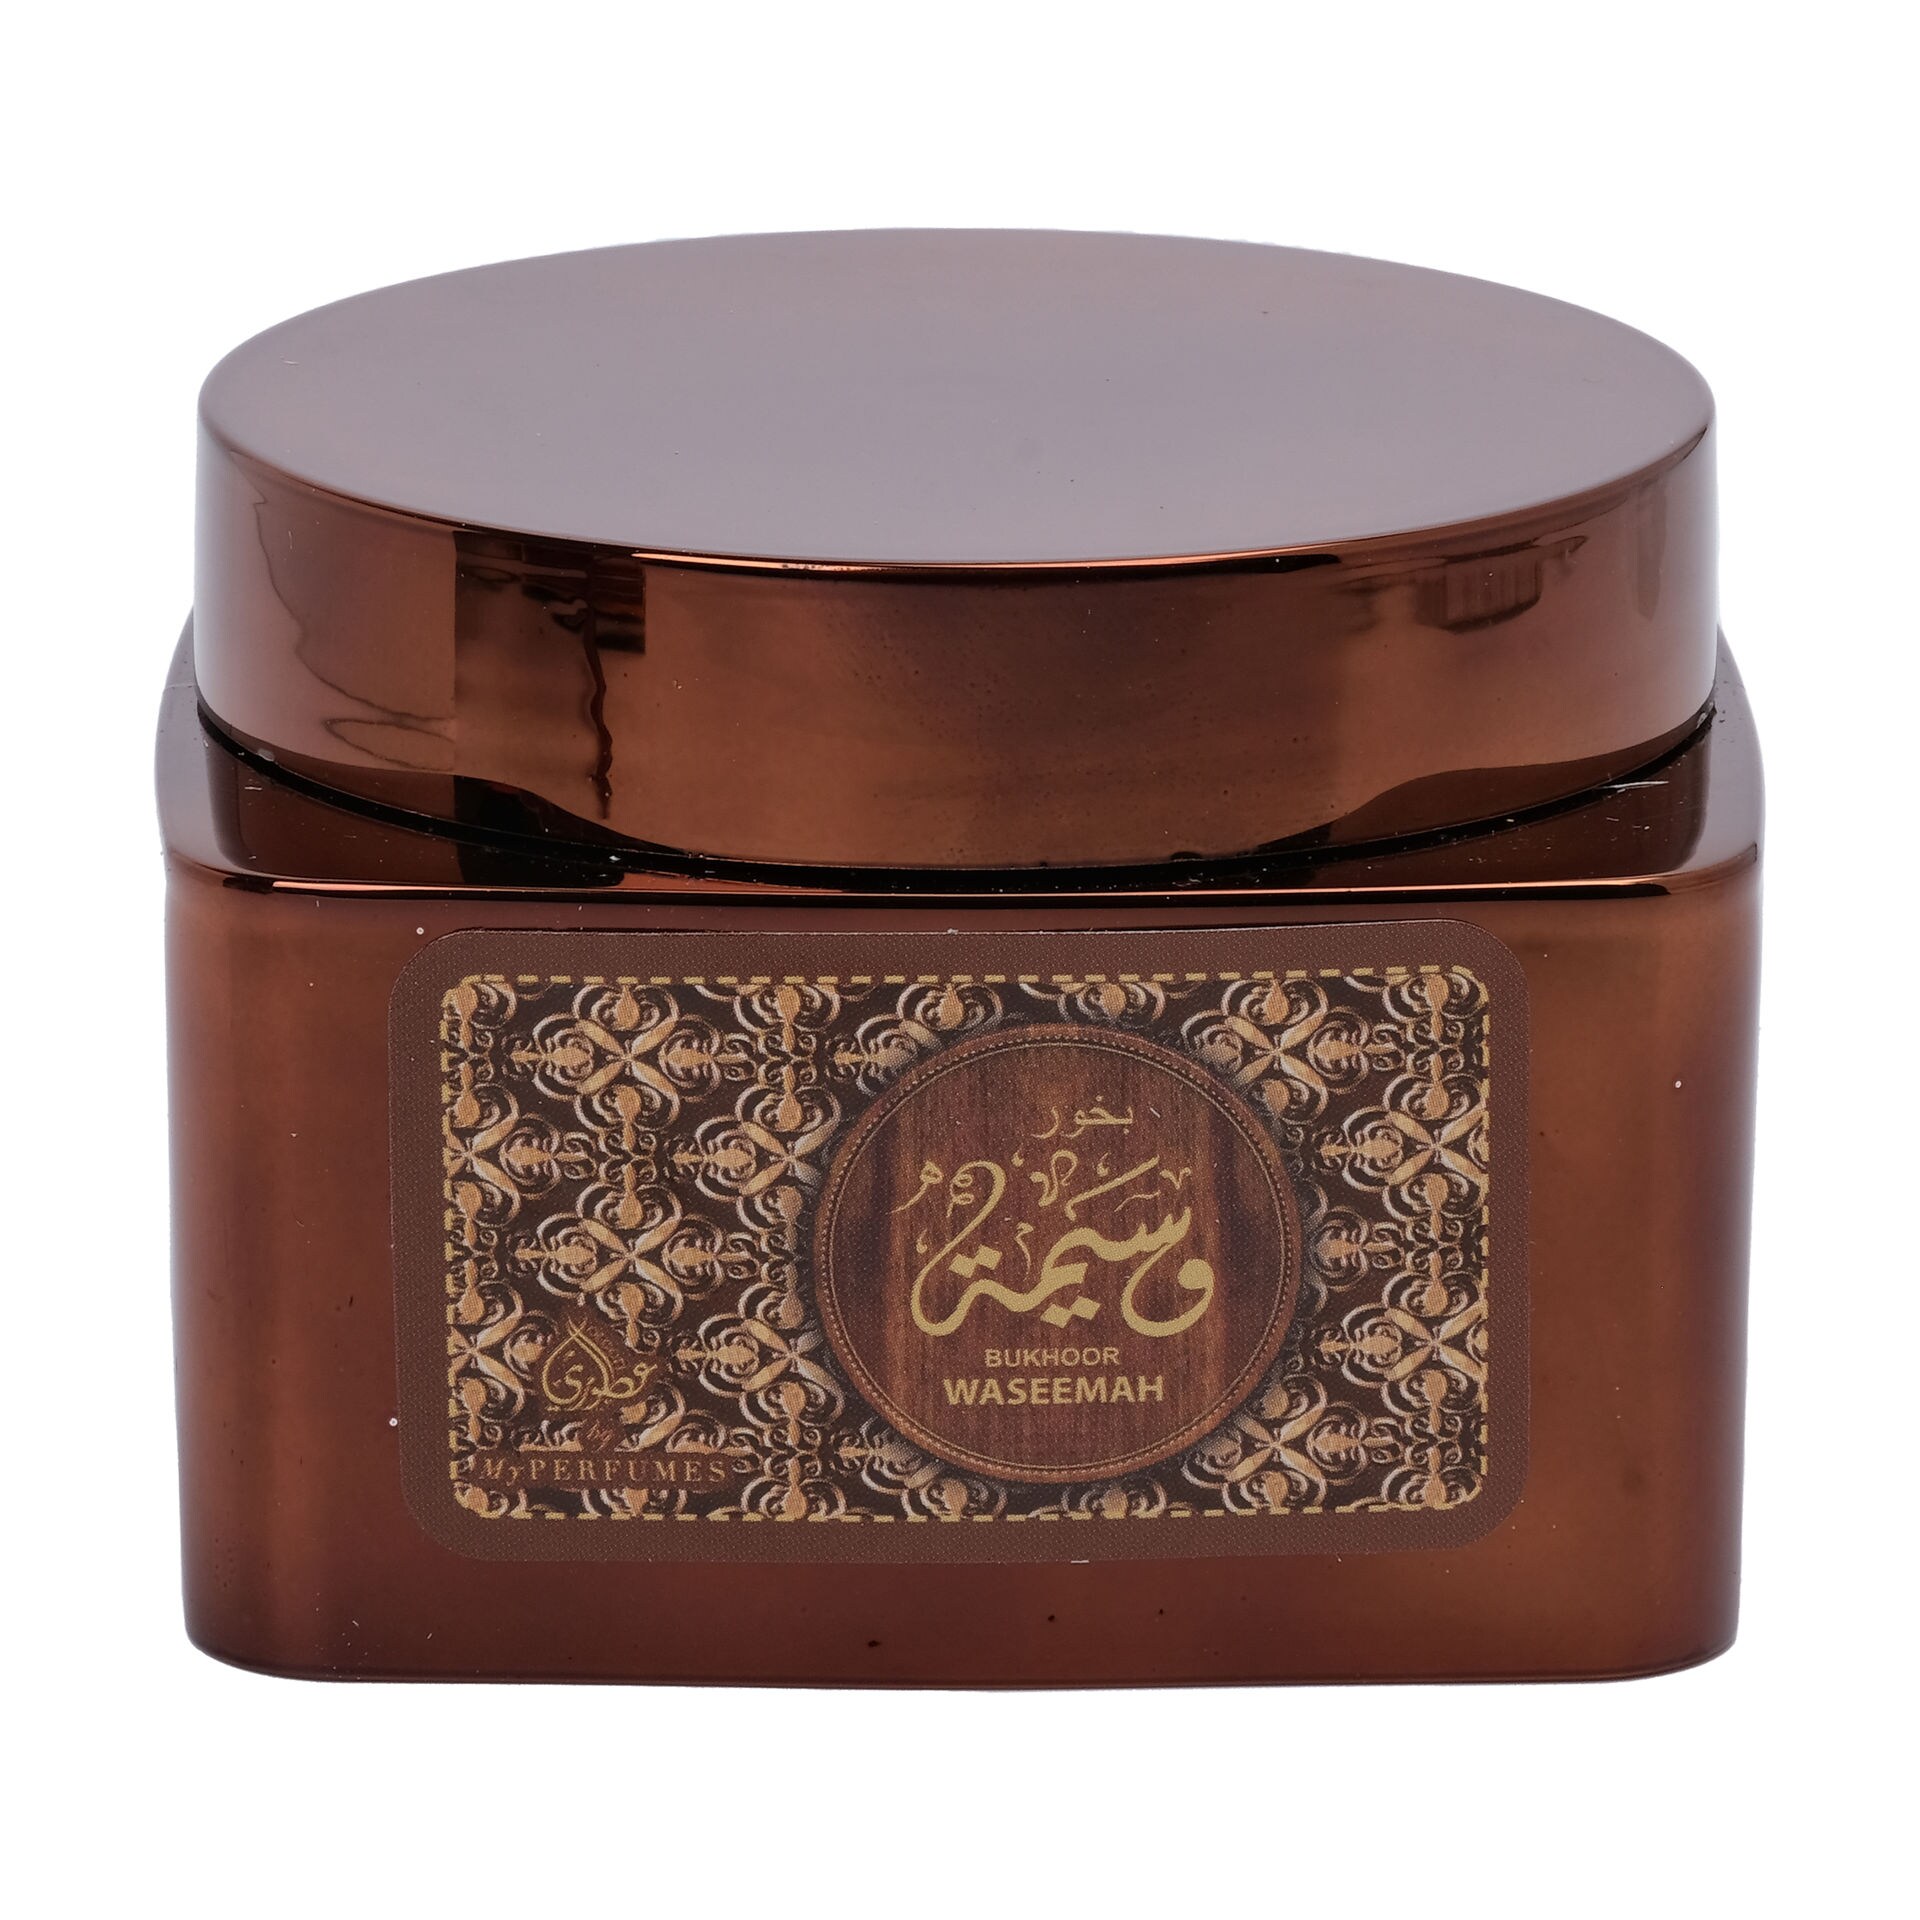 Shop MY PERFUME My Perfume Quality Waseemah Bukhoor, 70g | Dragonmart ...